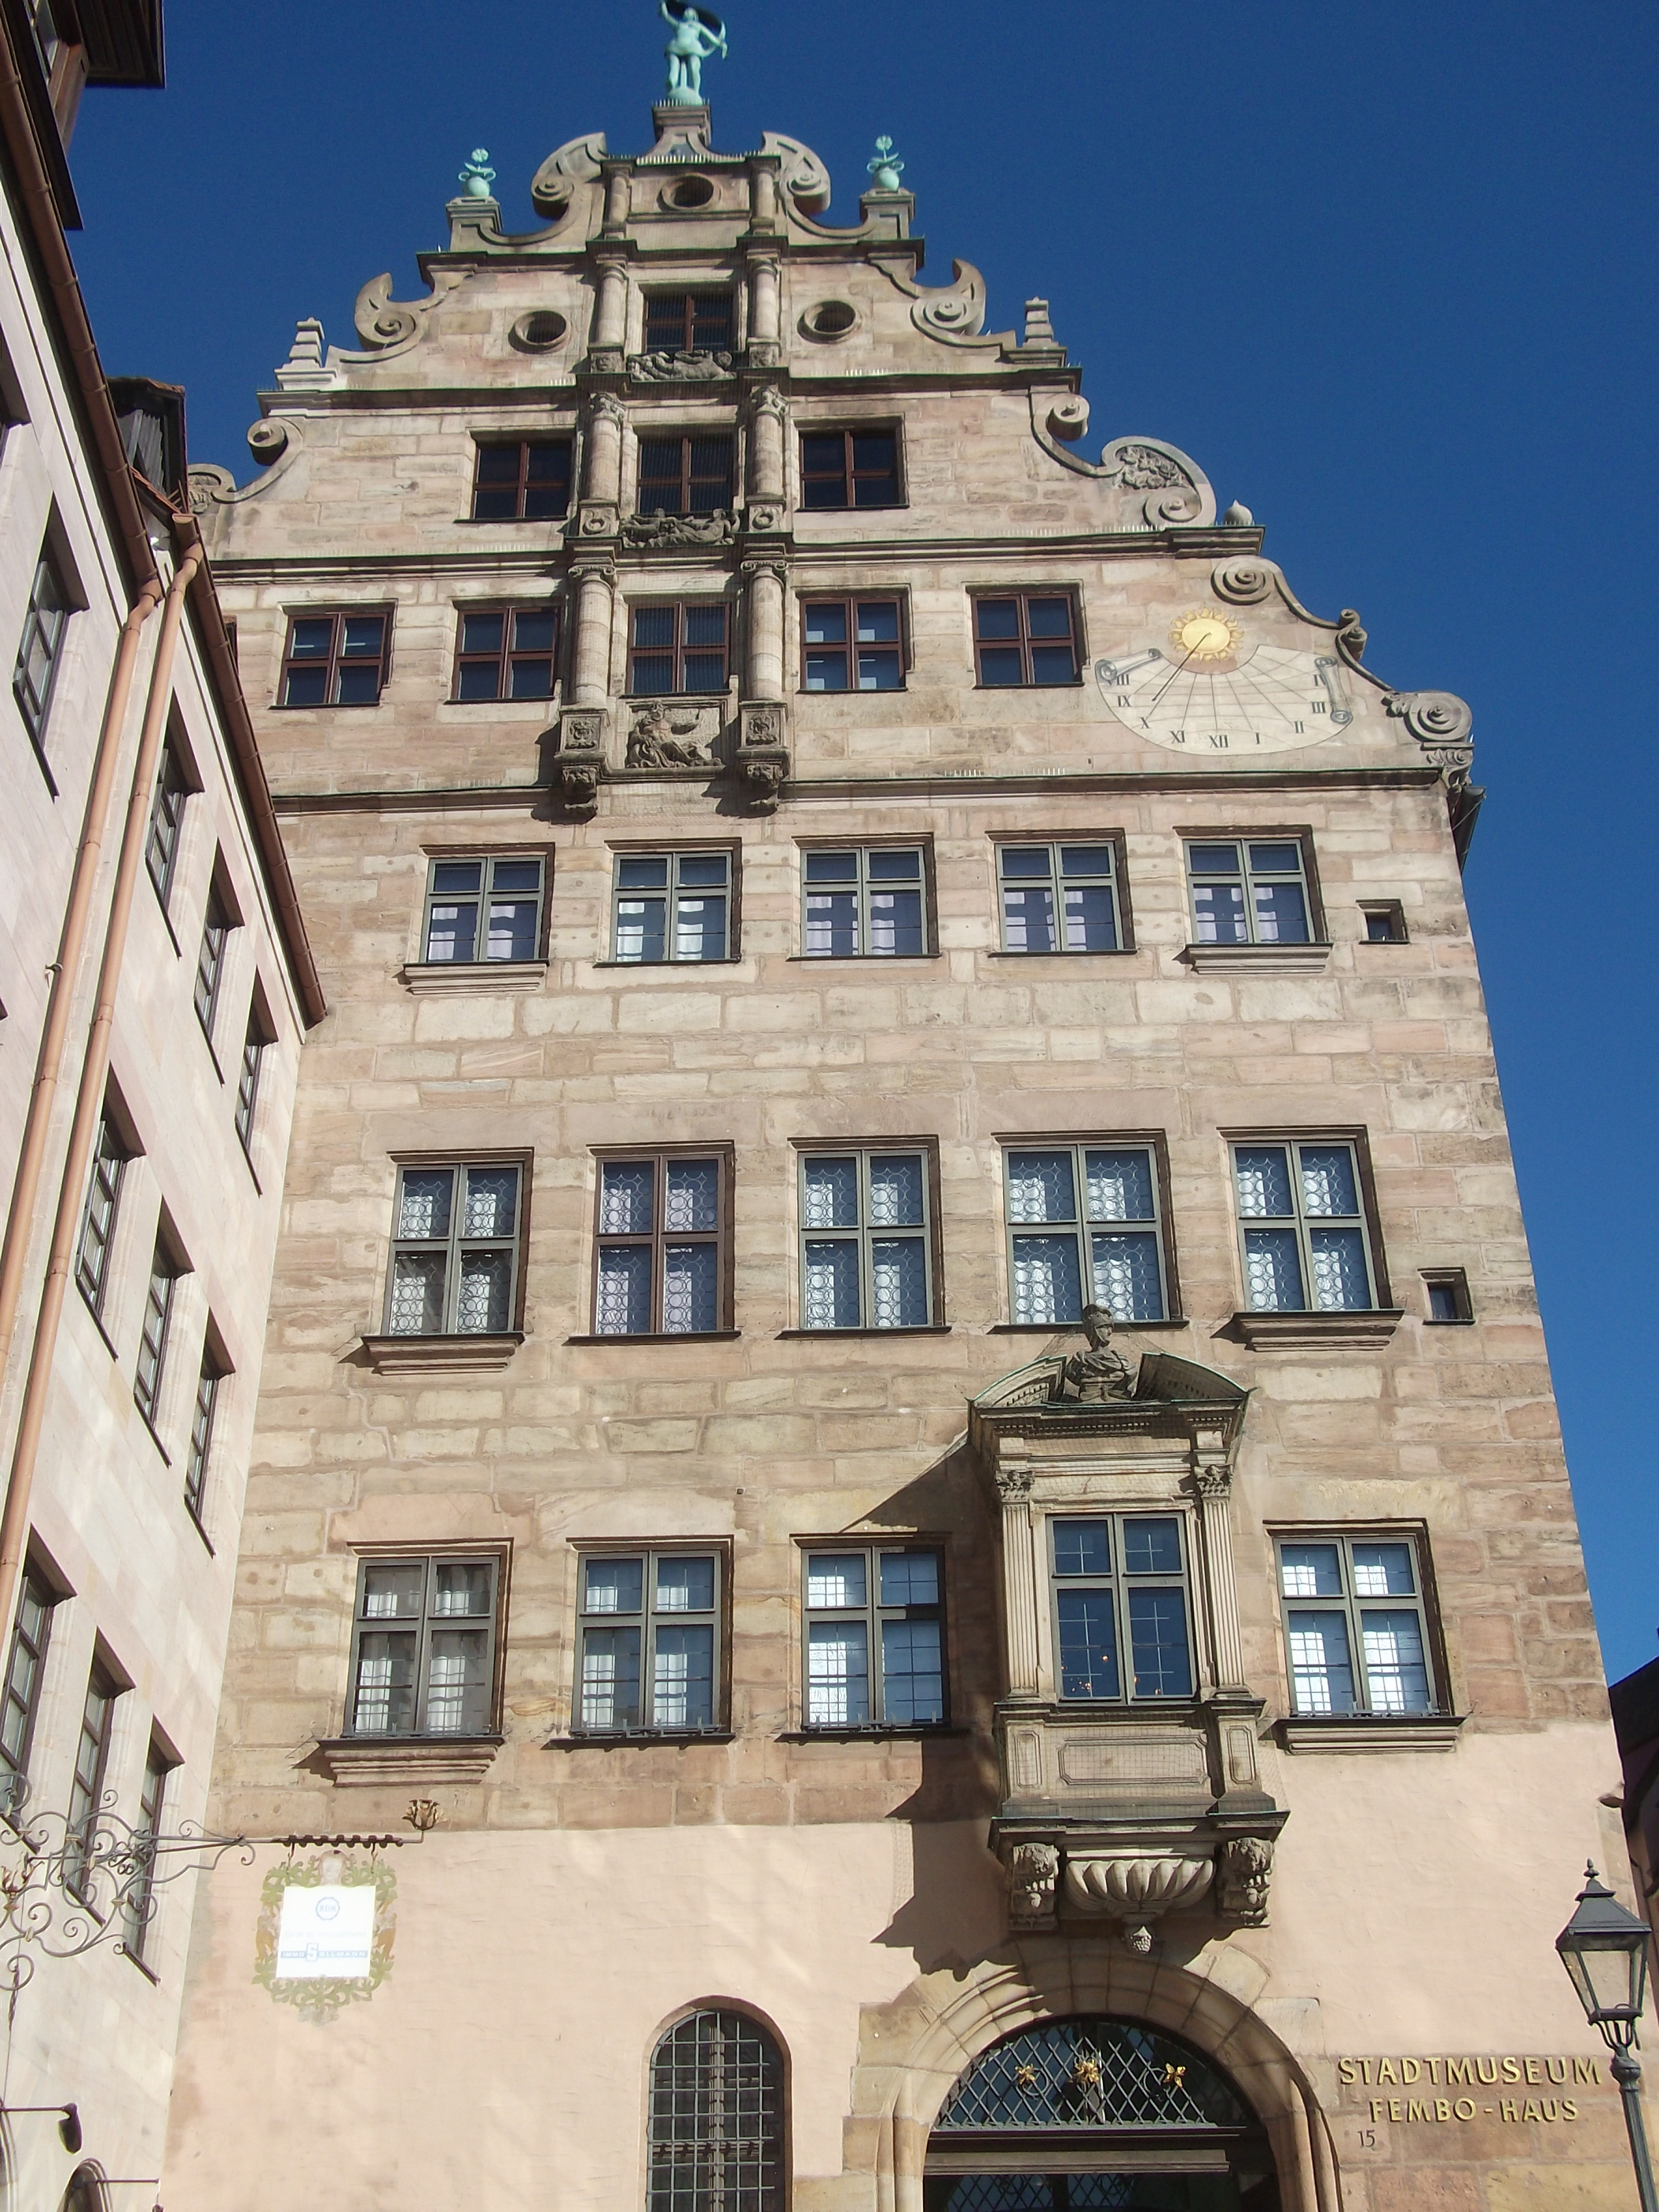 Die Renaissancefront vom Stadtmuseum - Fembohaus